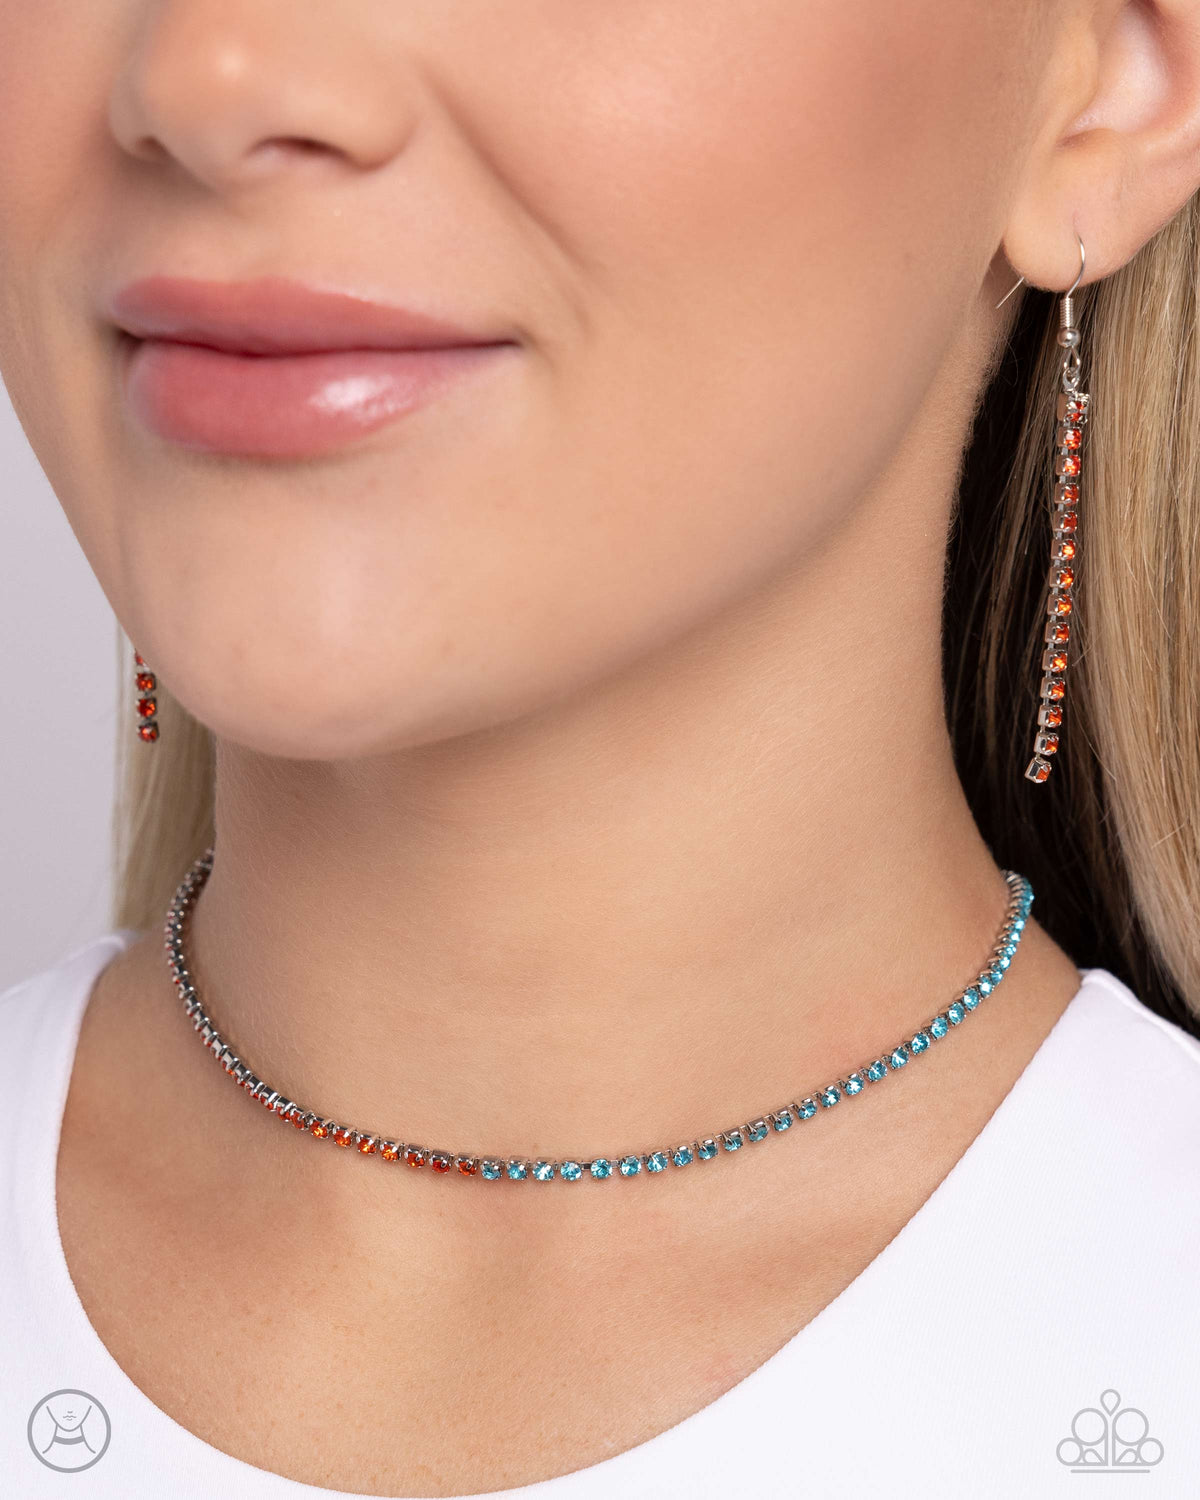 Dedicated Duo Orange &amp; Blue Rhinestone Choker Necklace - Paparazzi Accessories-on model - CarasShop.com - $5 Jewelry by Cara Jewels